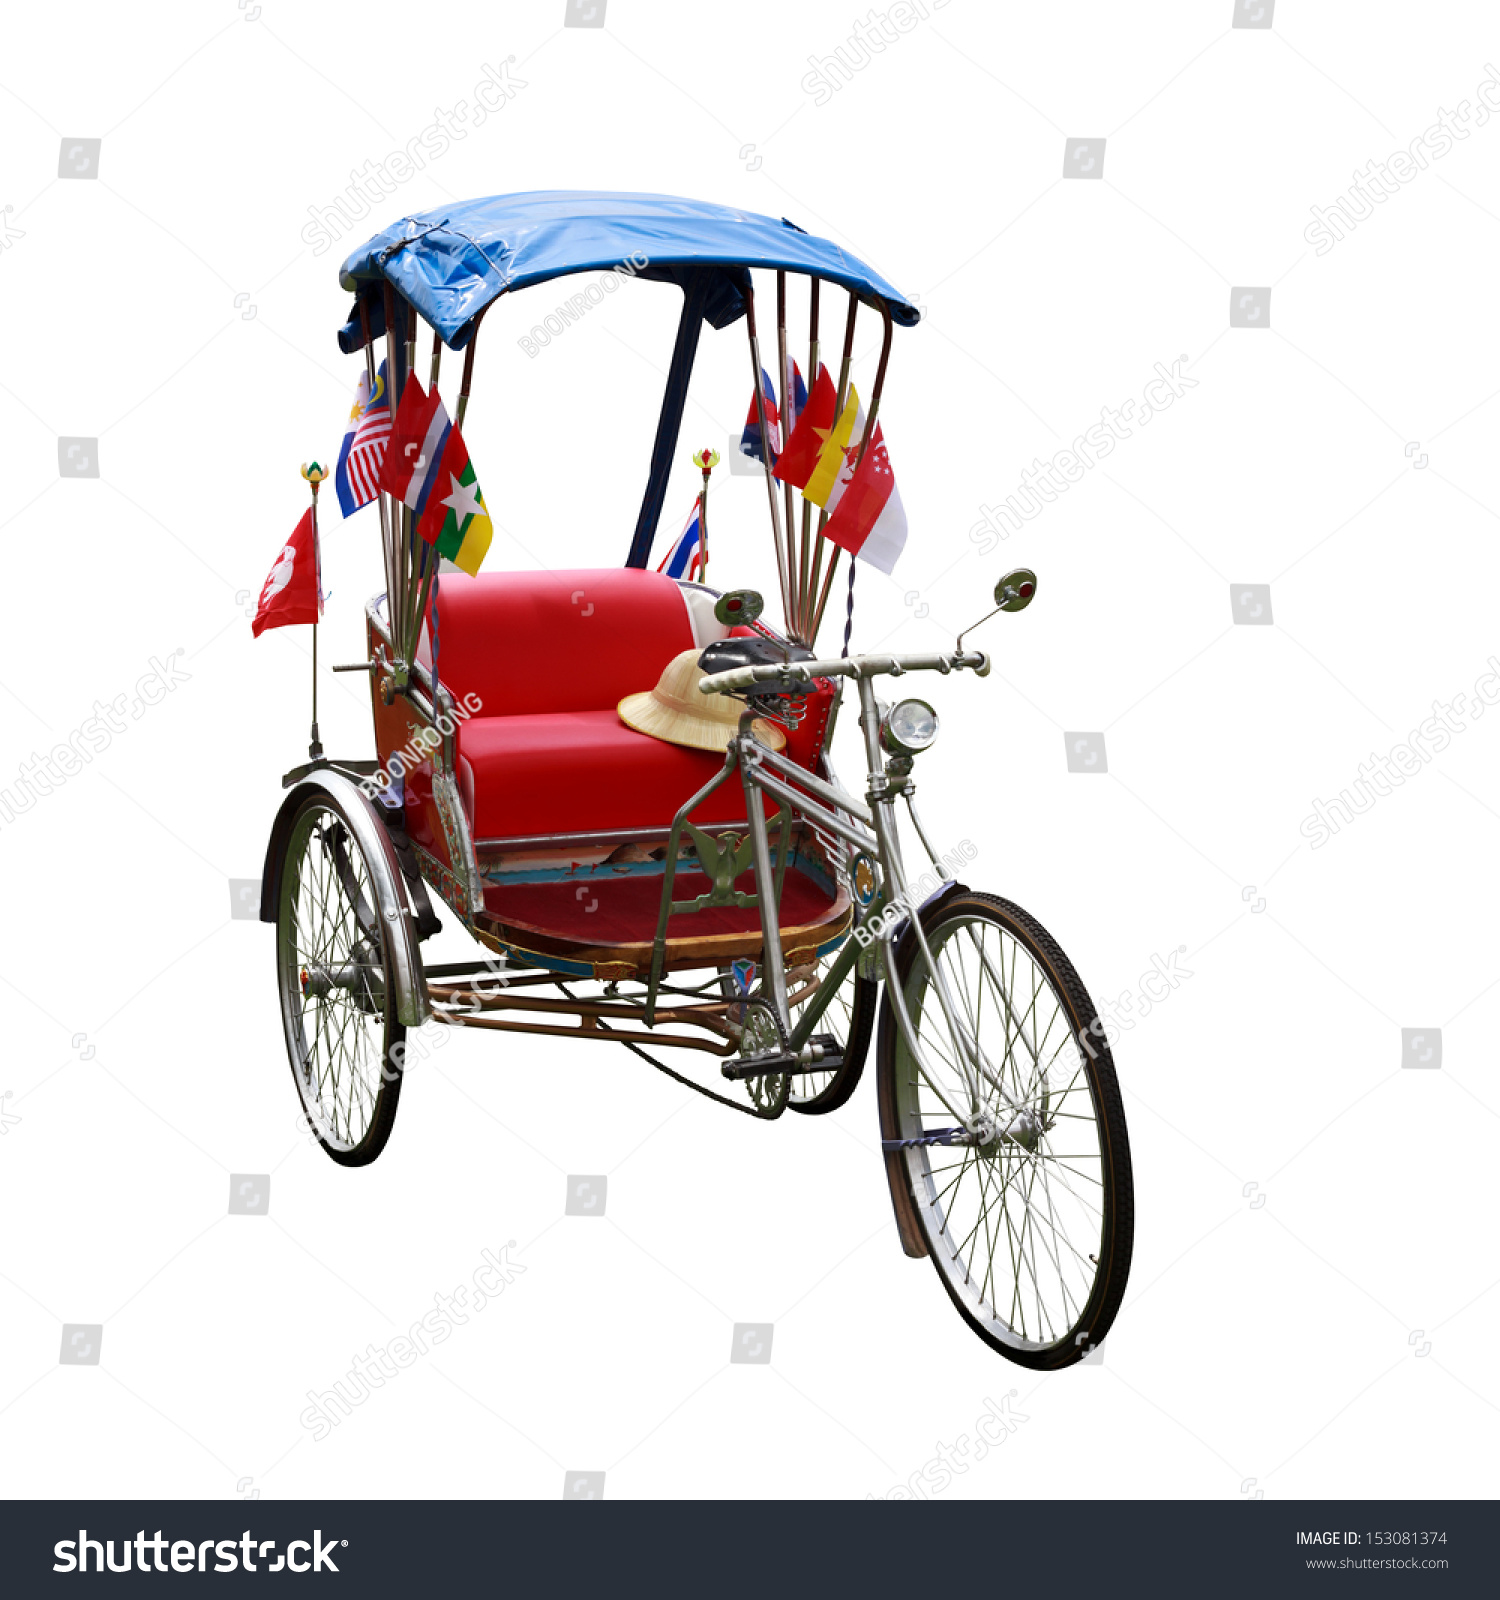 clipart of auto rickshaw - photo #43